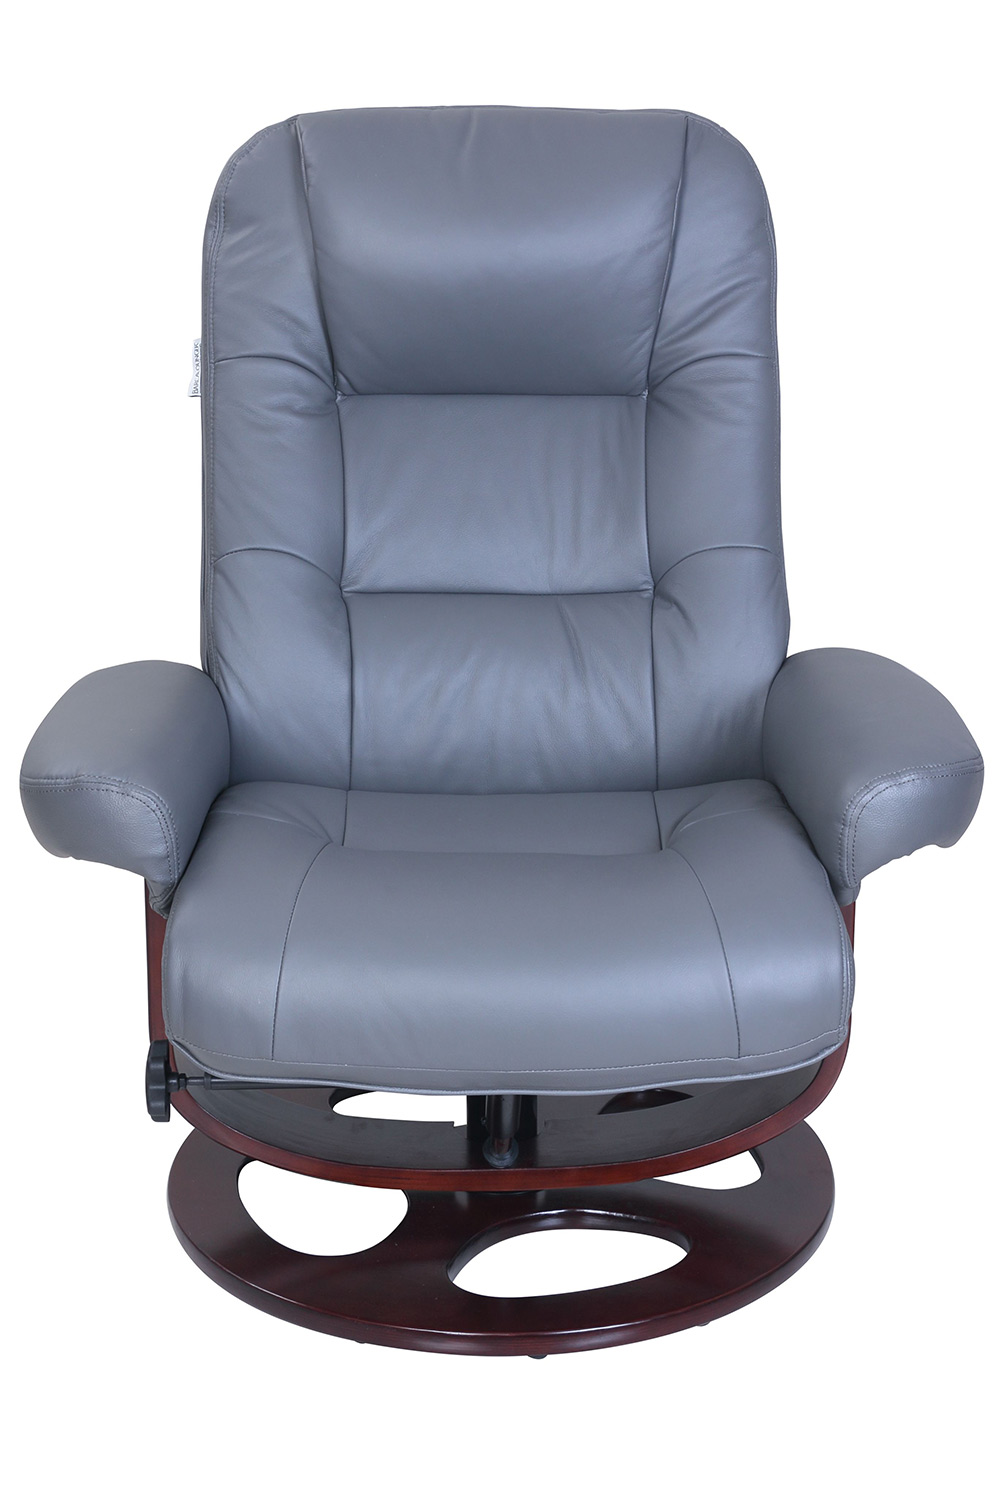 Barcalounger Jacque Pedestal Recliner Chair and Ottoman - Marlene Gray/Leather Match